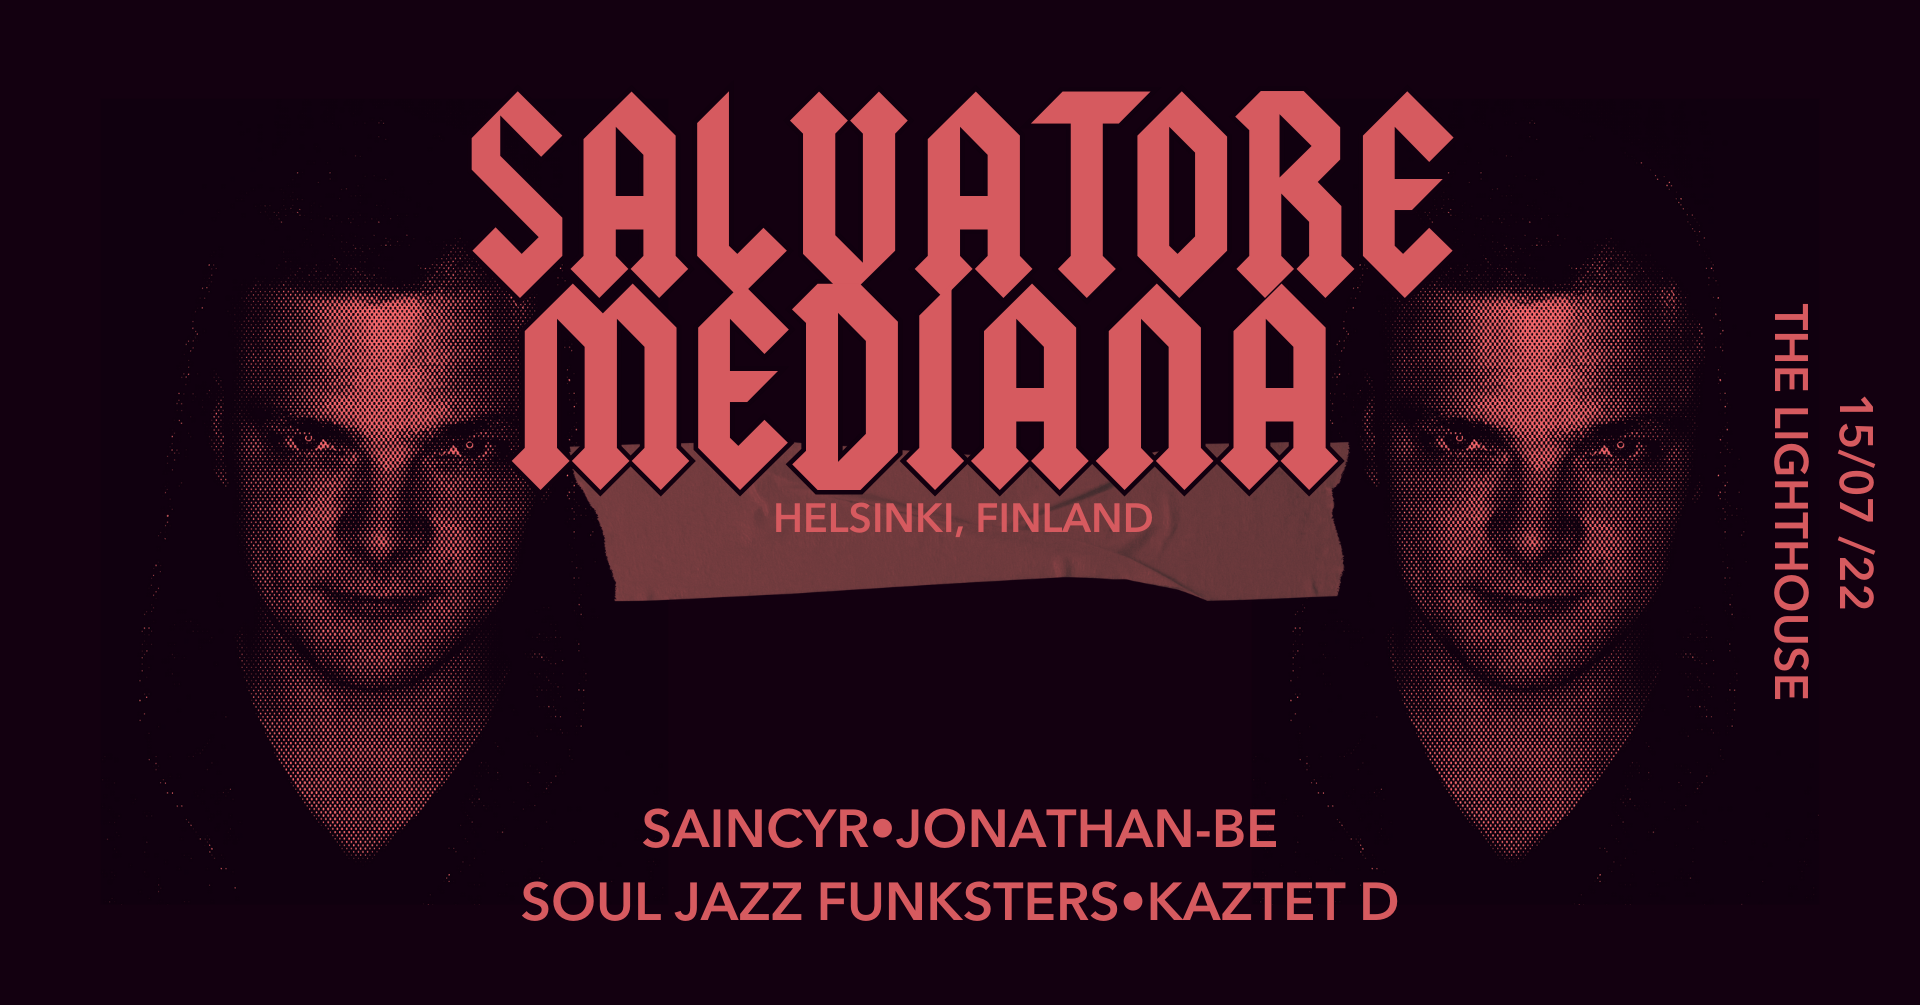 Salvatore Mediana, Saincyr, Jonathan-Be, Soul Jazz Funksters, Kaztet D - フライヤー表